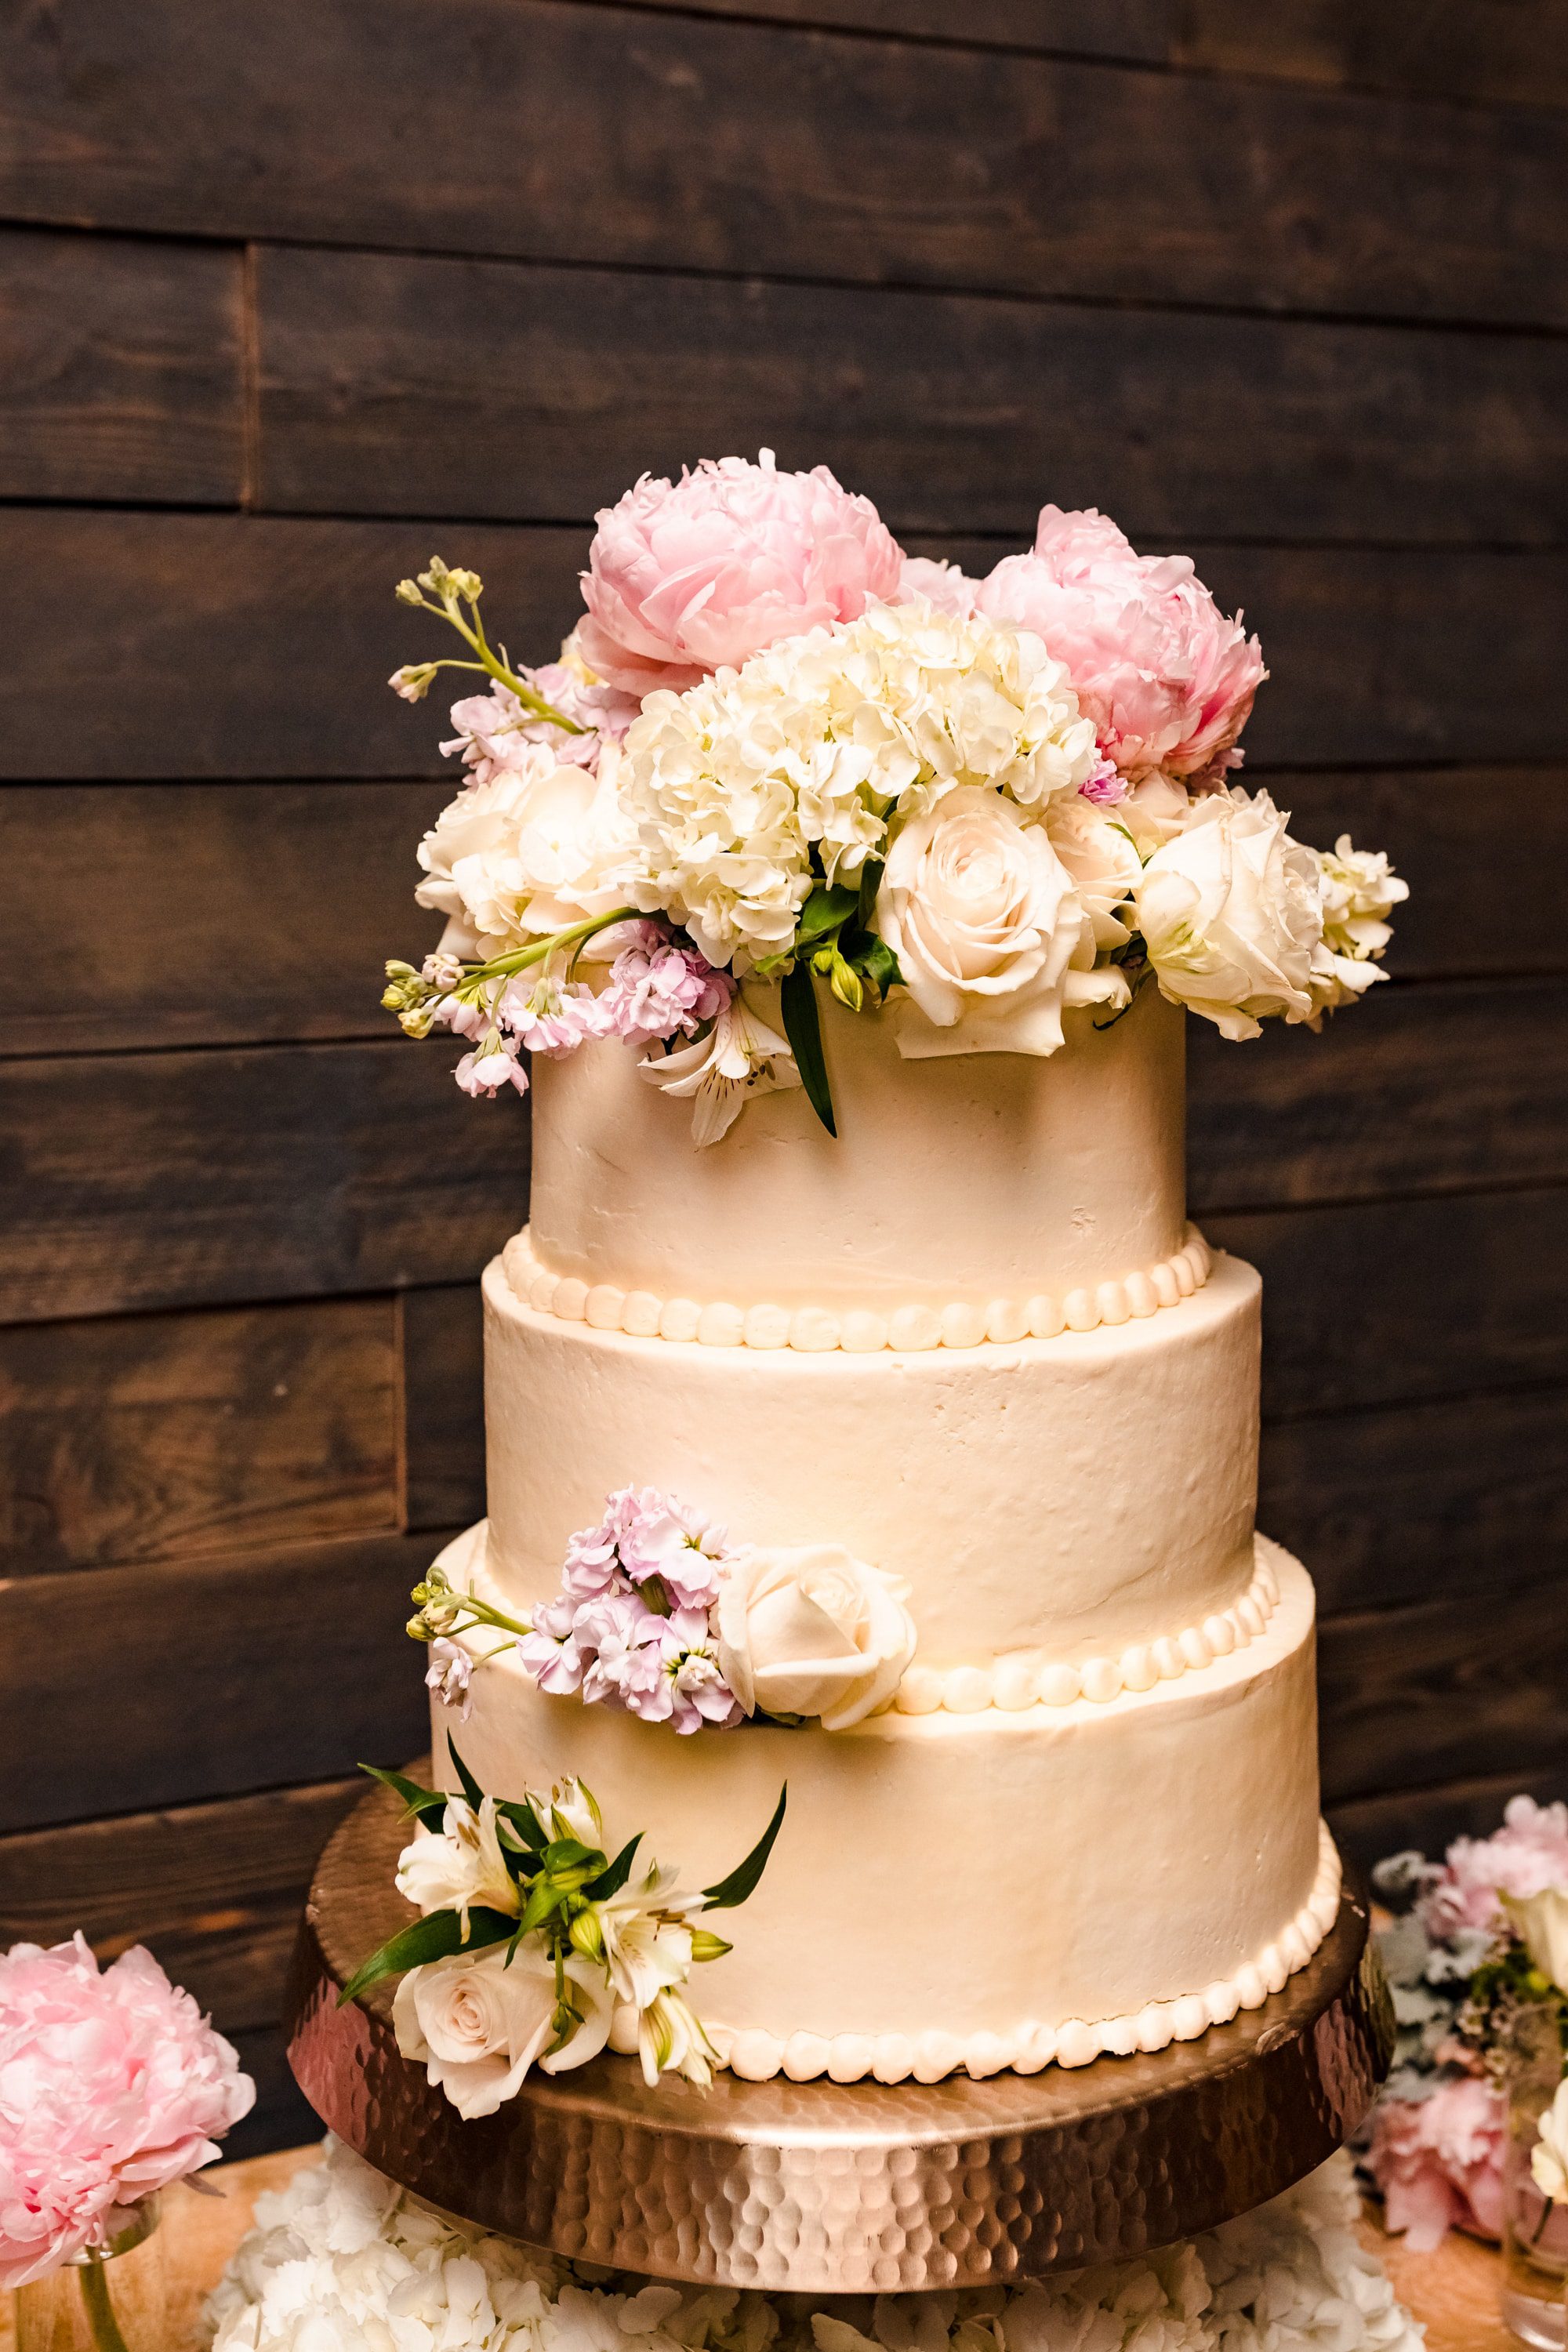 three tiered wedding cake, elegant wedding cake, wedding cake with flowers, simple wedding cake, white wedding cake with flowers, white and pink wedding cake